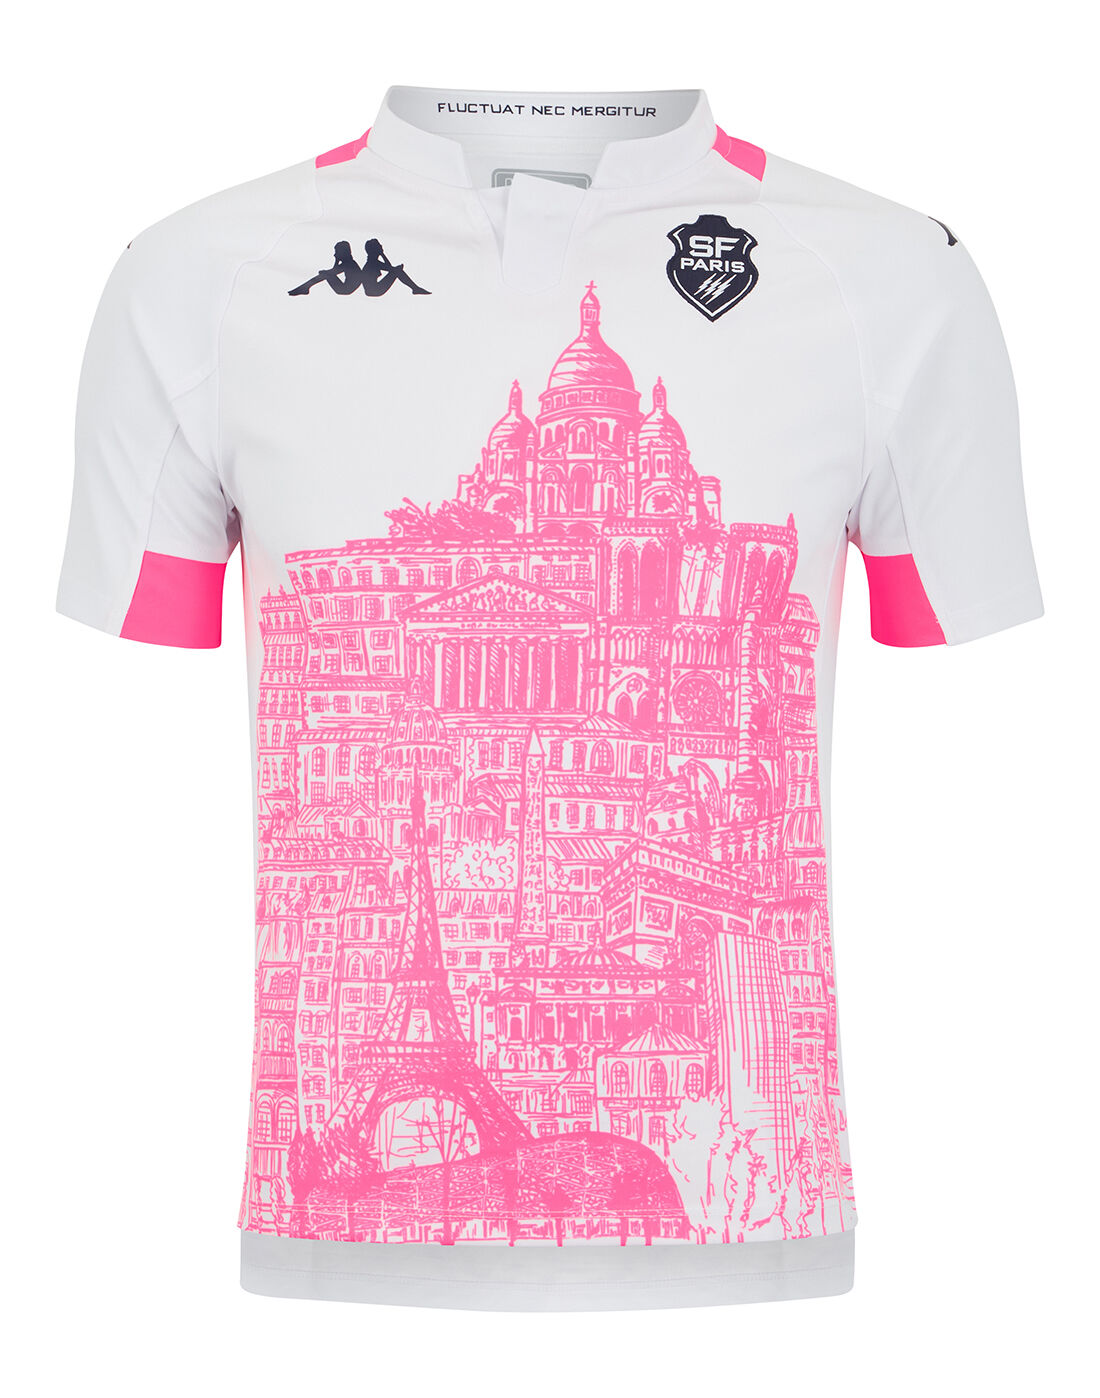 stade francais pink kit